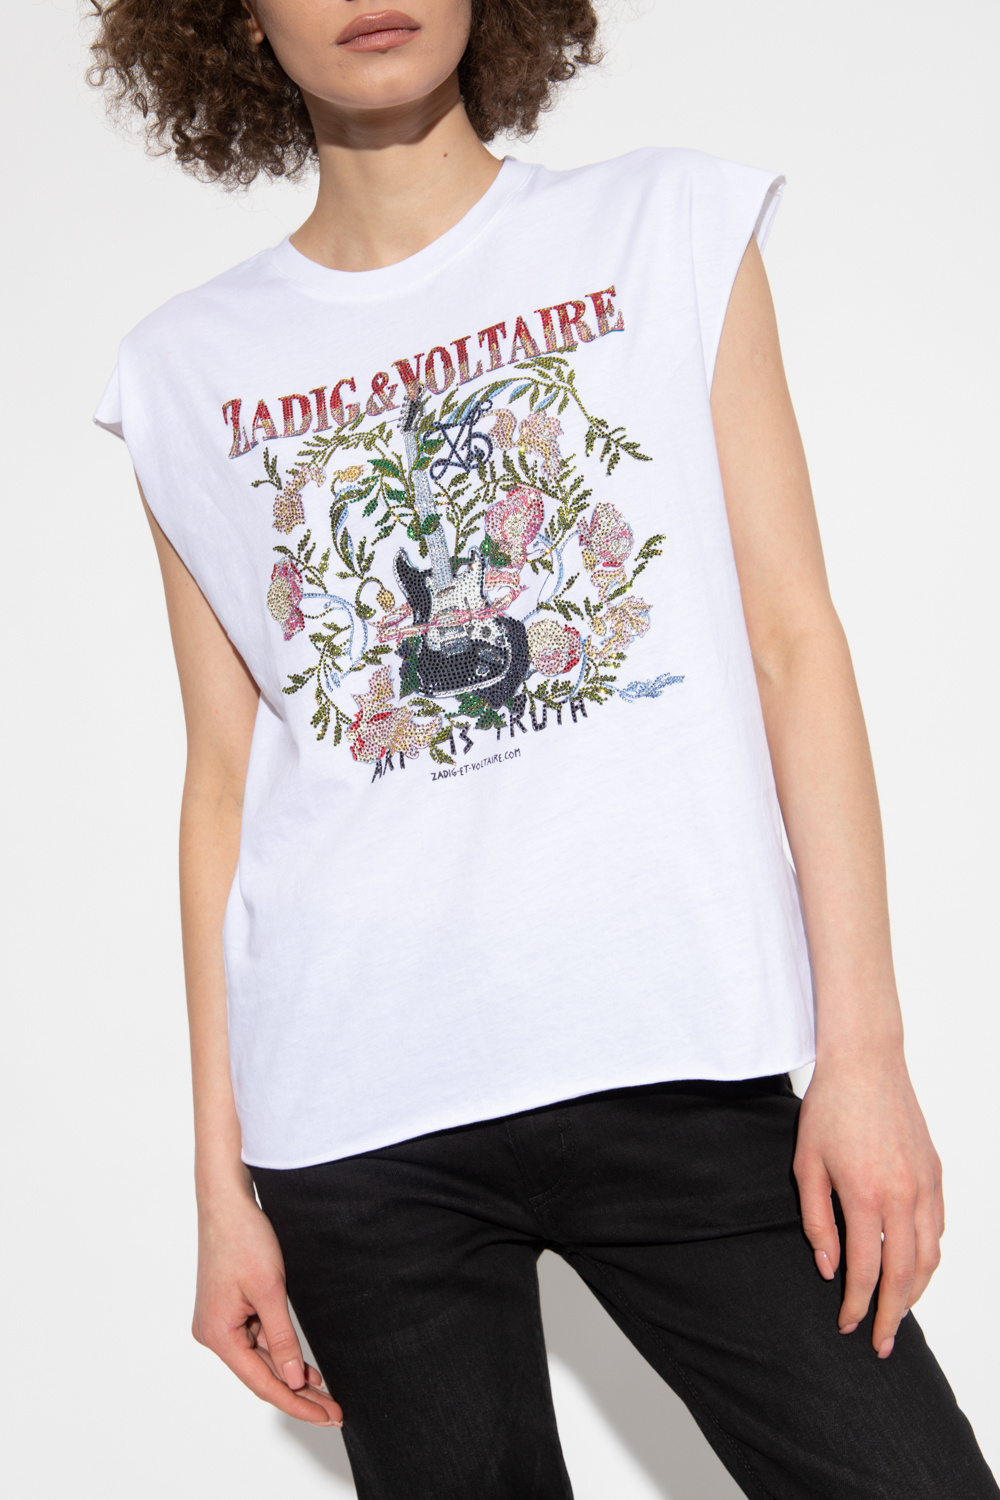 Zadig & Voltaire Appliquéd T-shirt